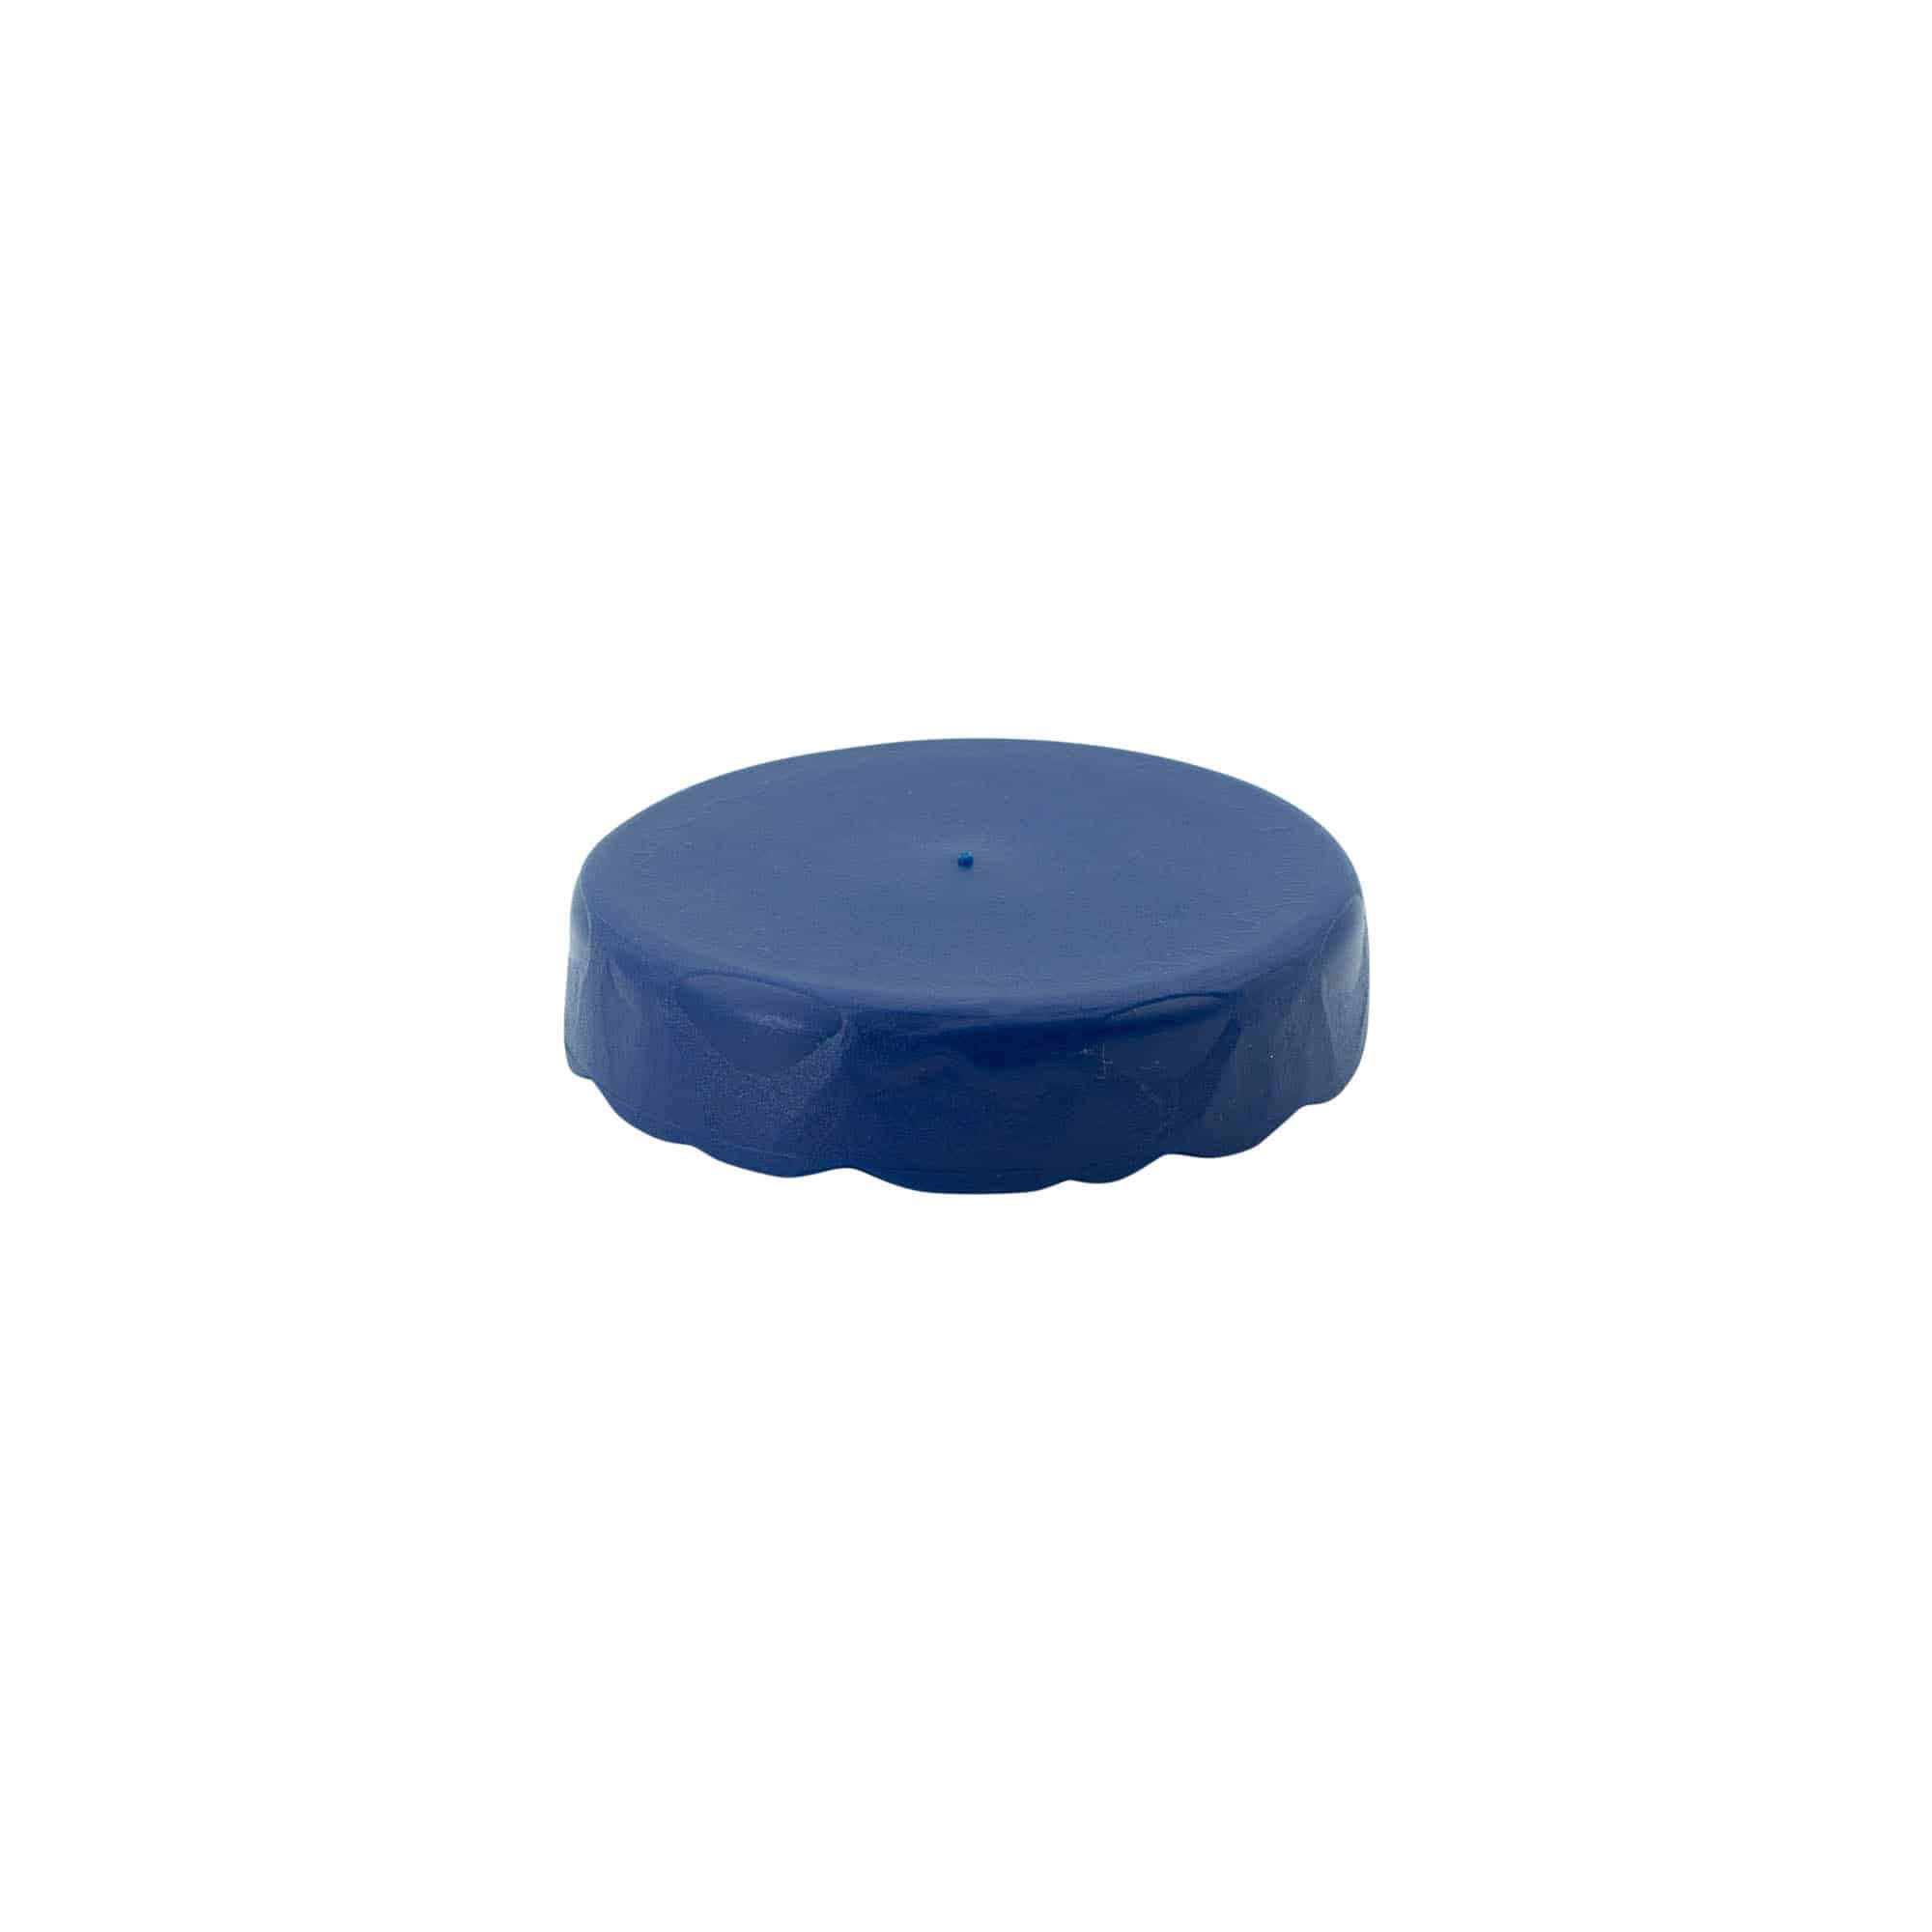 Slip lid for narrow neck ceramic pot, HDPE plastic, blue